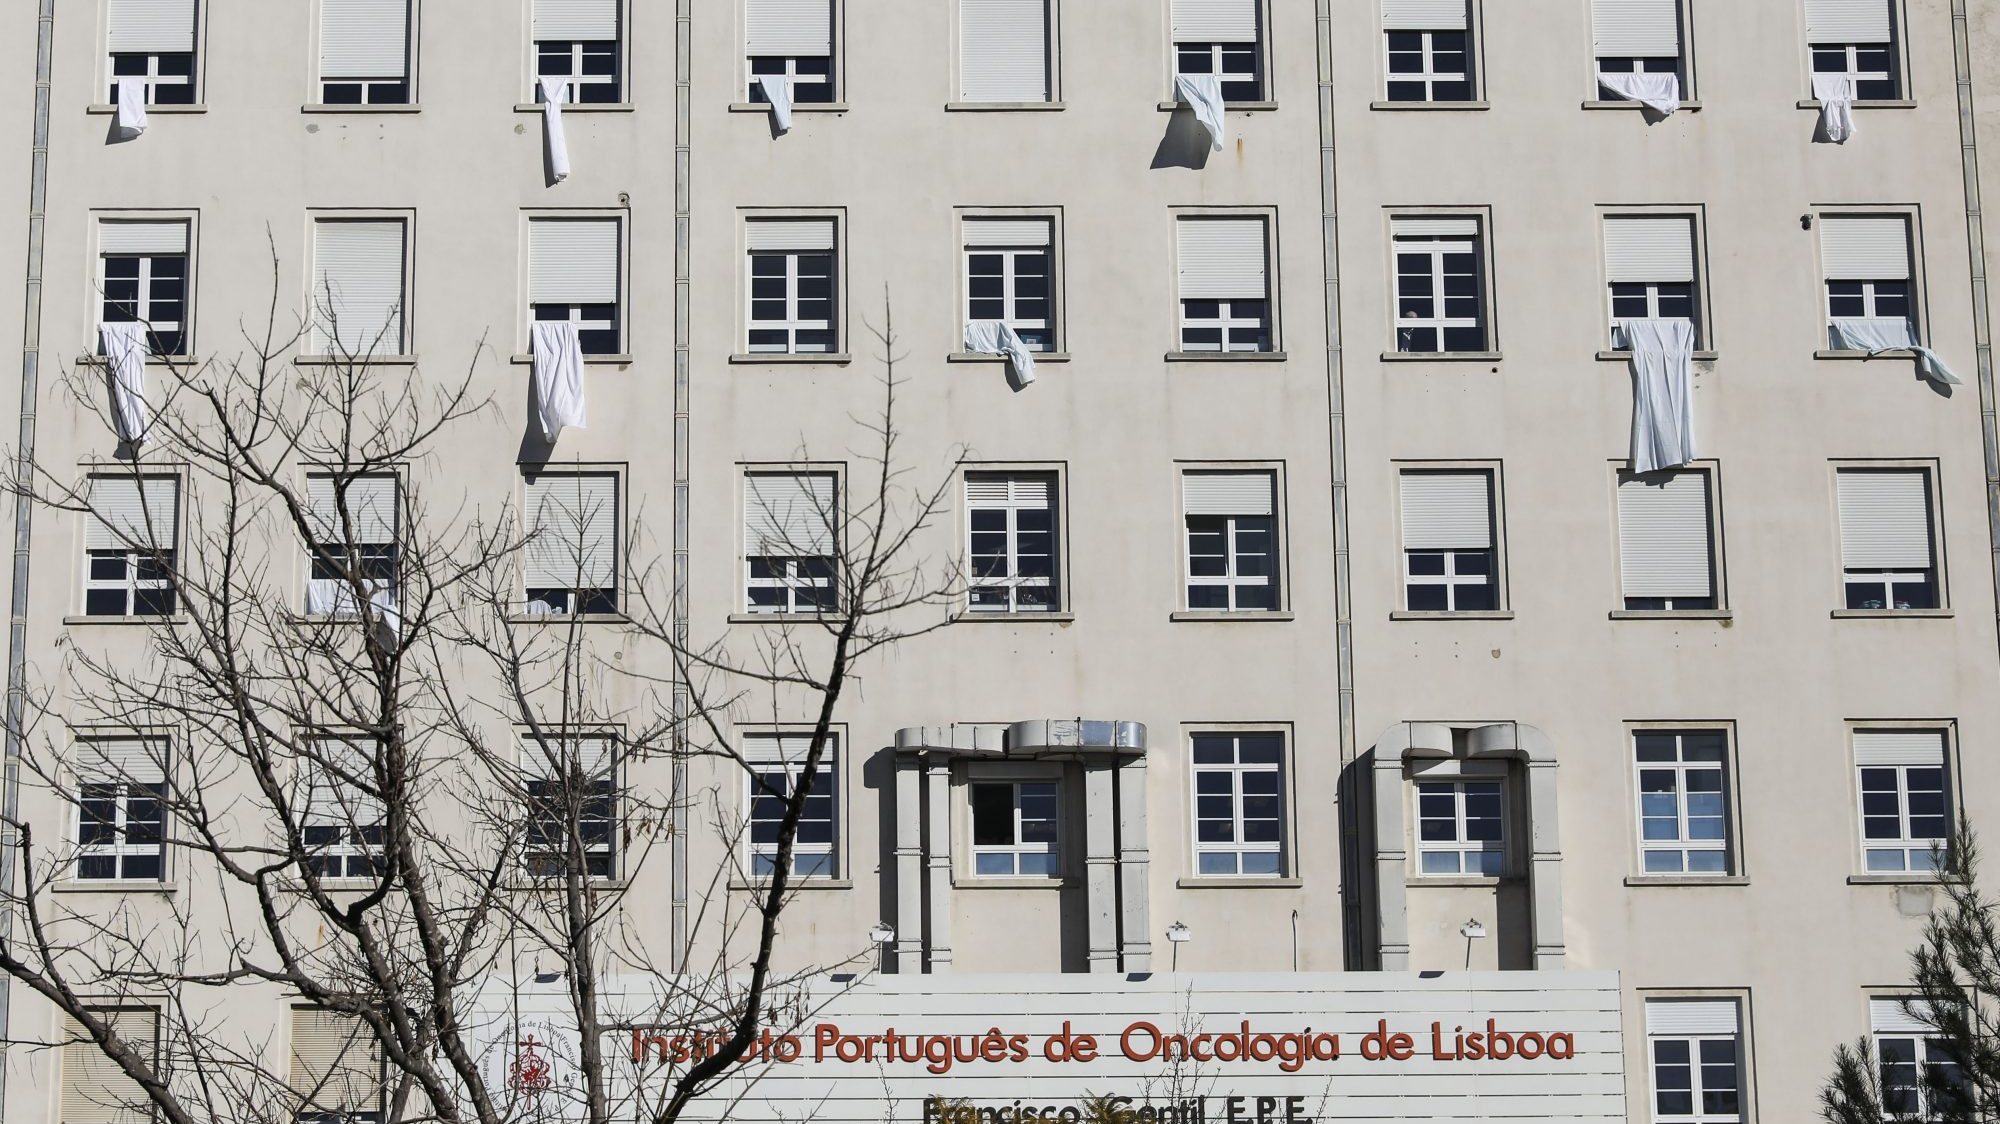 Por ano o IPO Lisboa recebe cerca de 15 mil novos utente